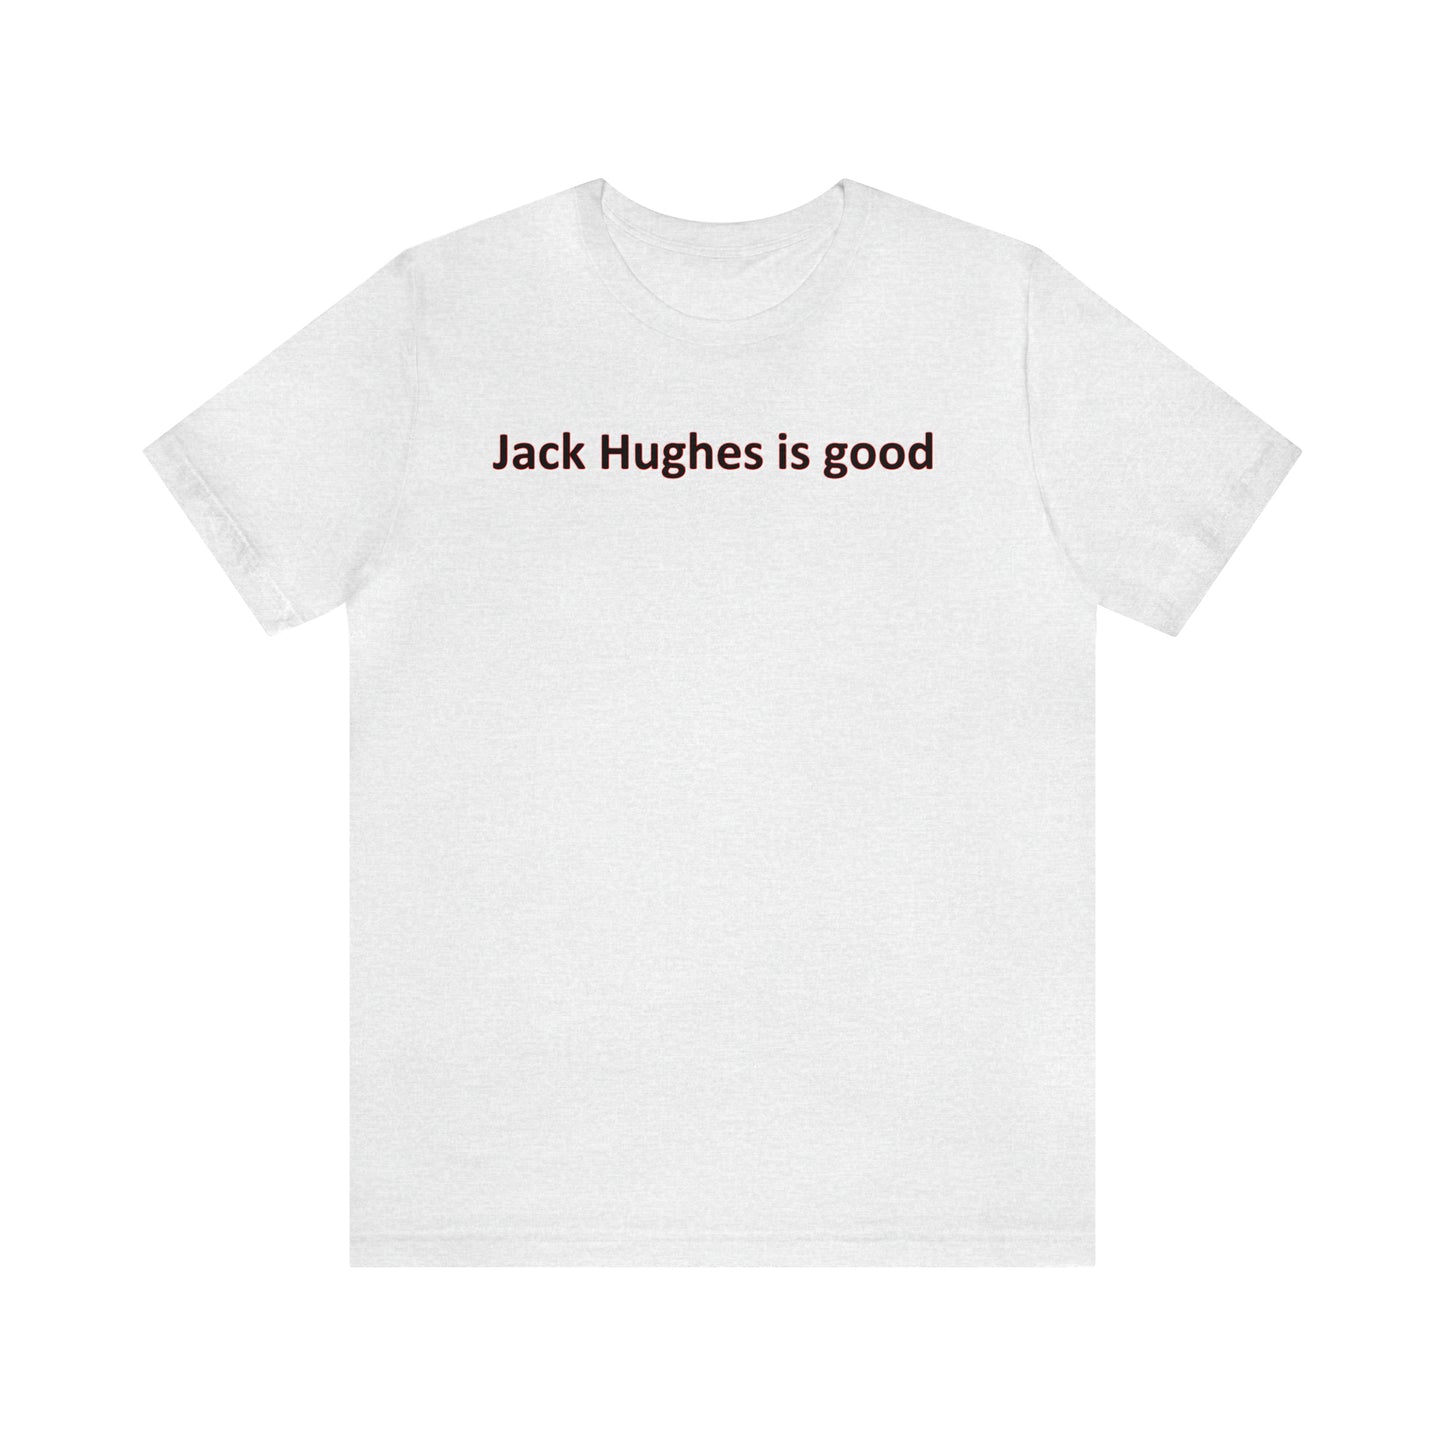 Jack Hughes is good T-shirt